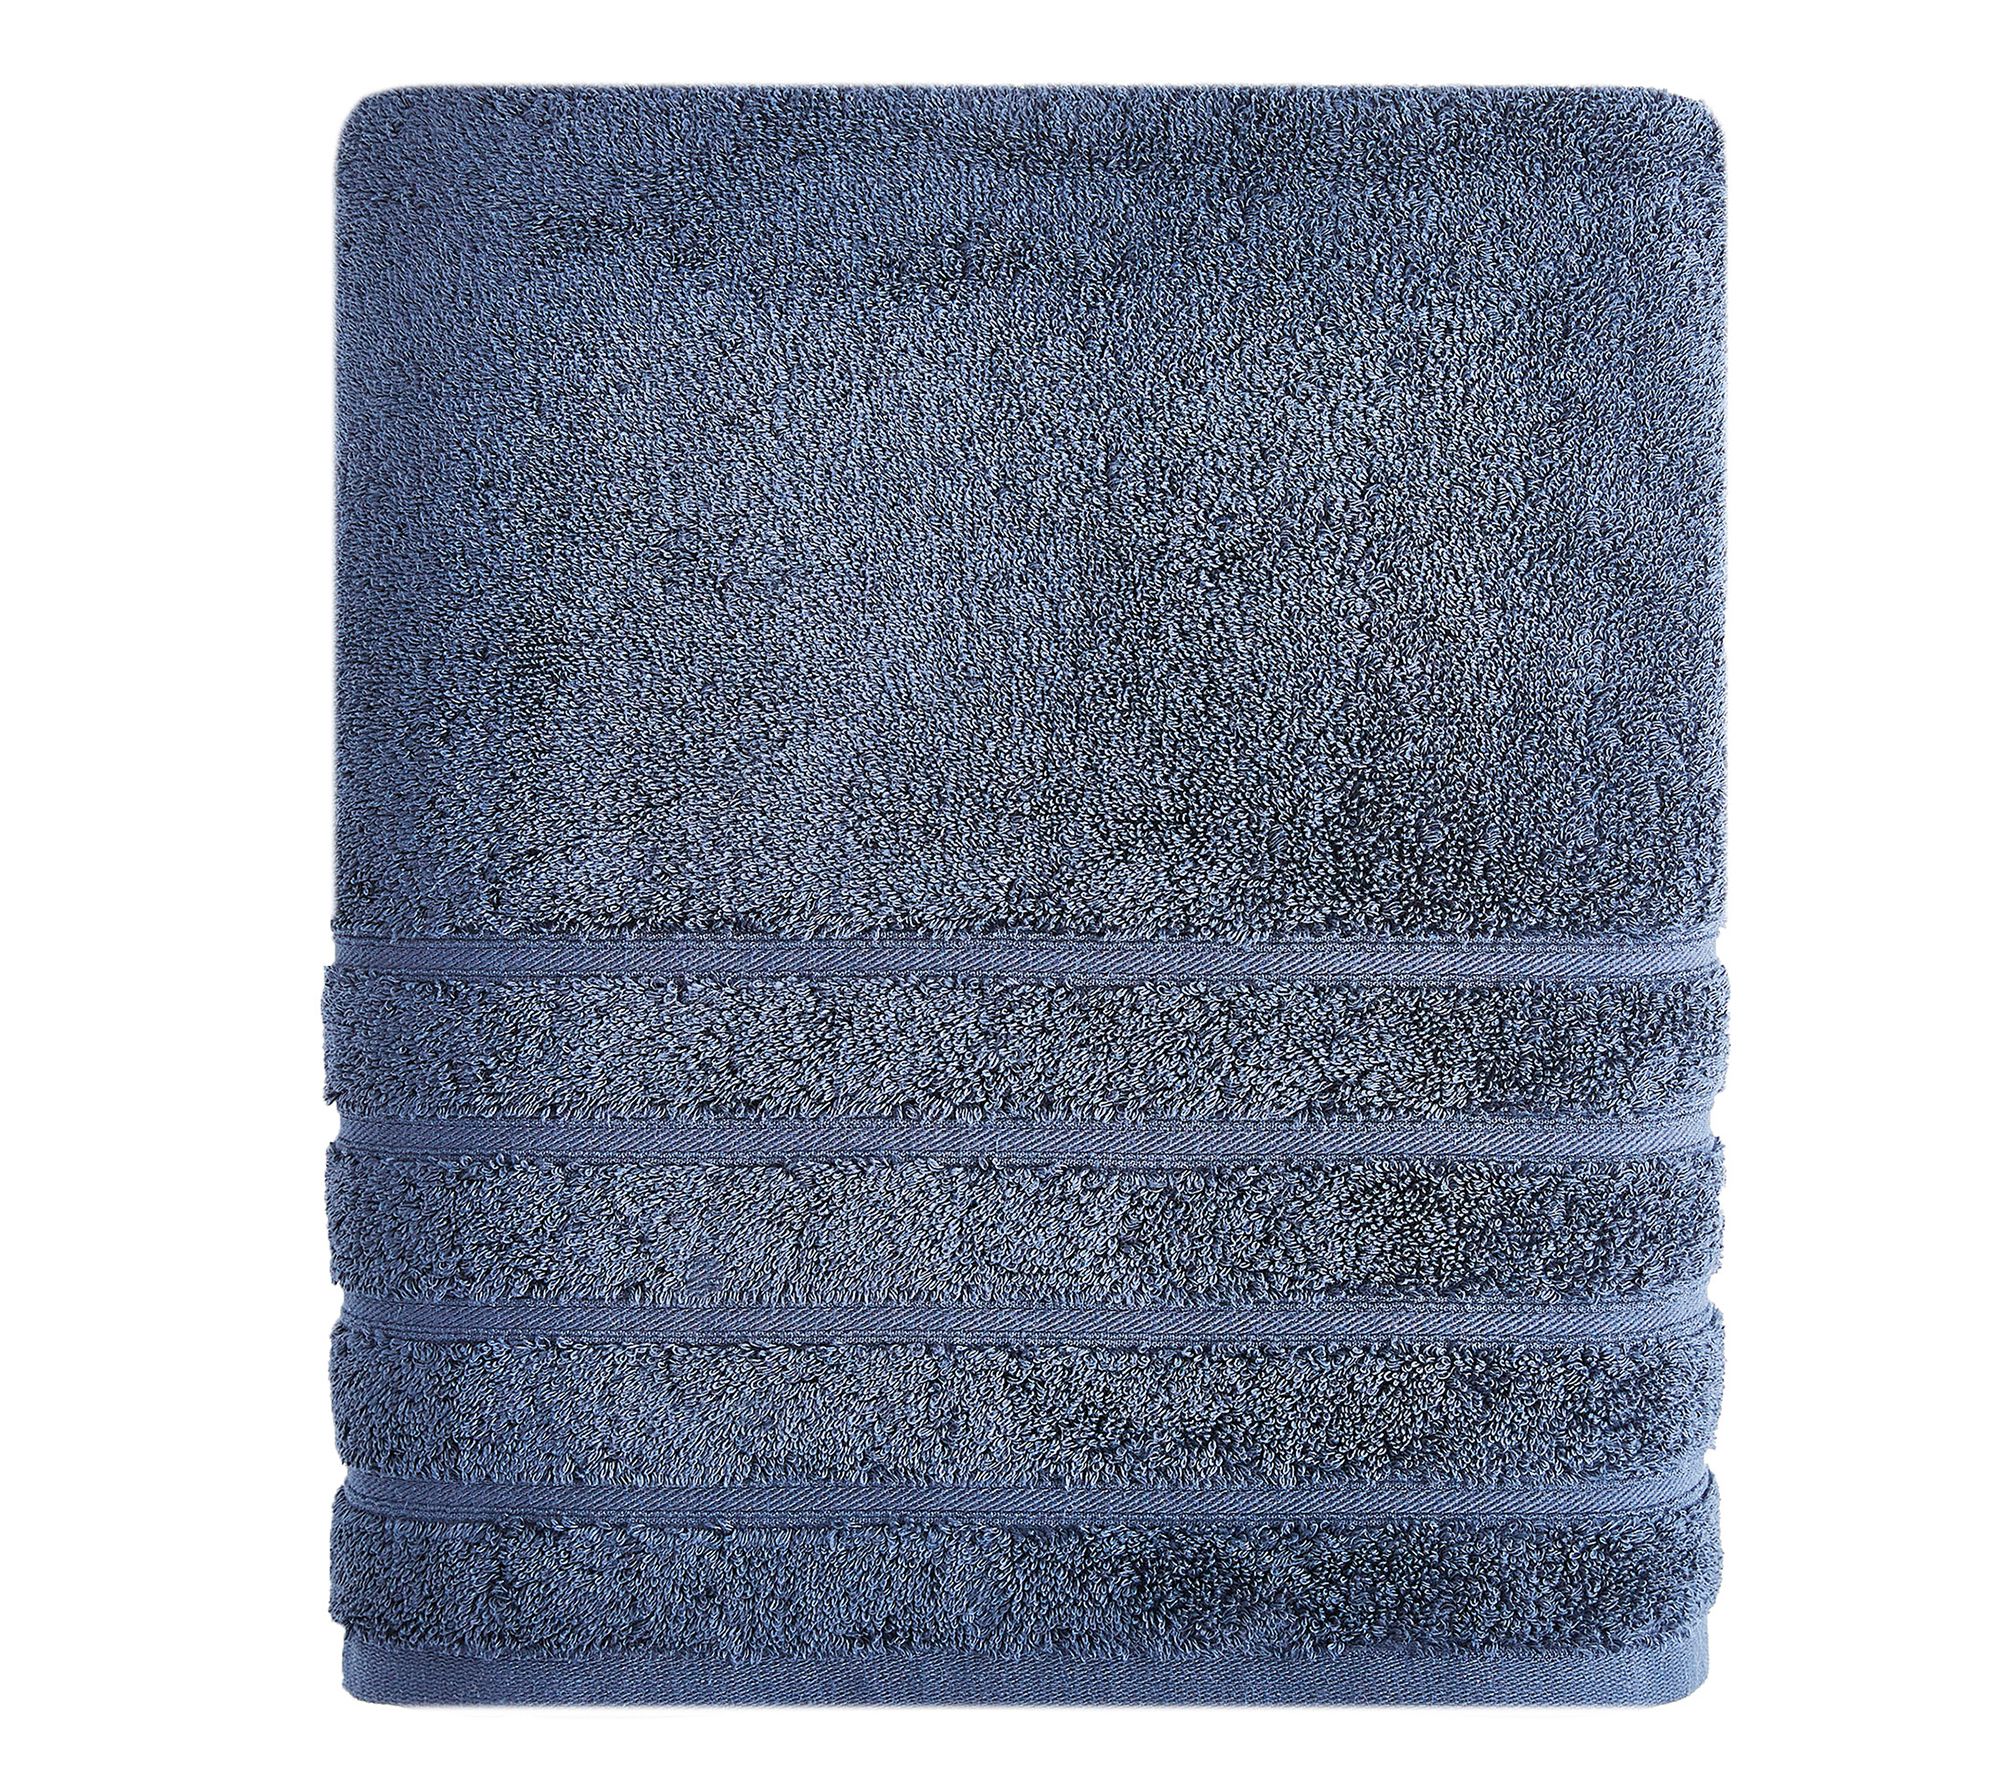 Lynova Plush Towels in Sea - Hotel Luxury Bath Towel - Set of 2 by Standard Textile